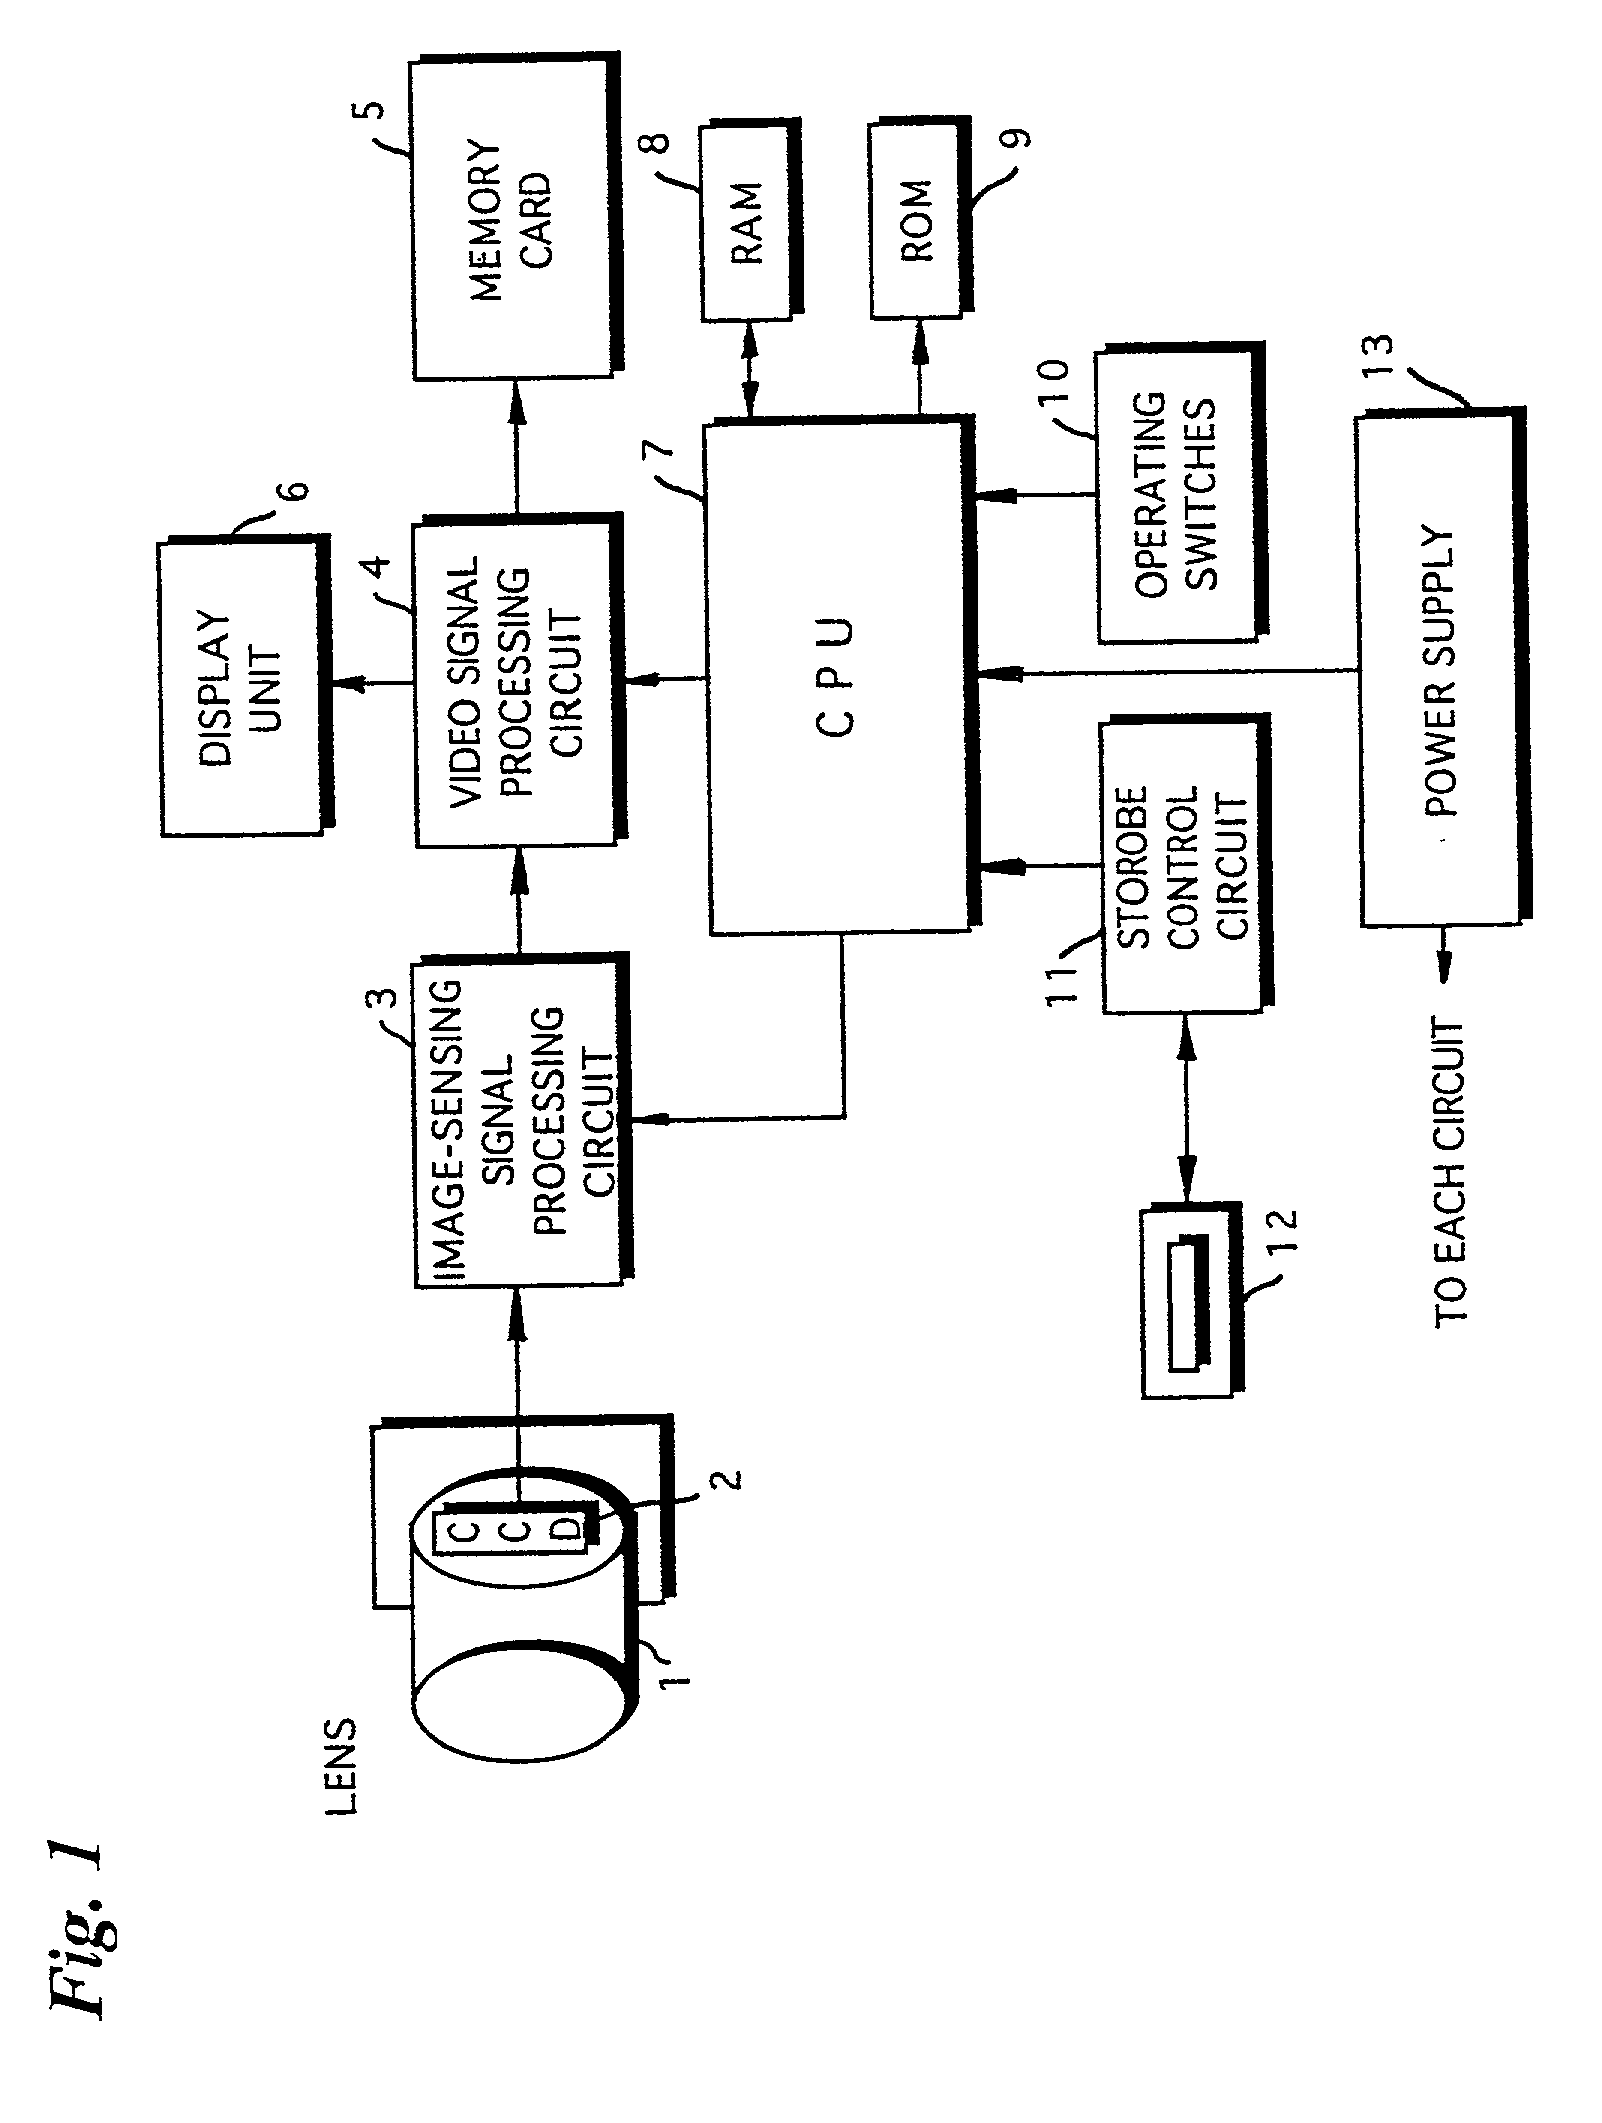 Image sensing apparatus and method